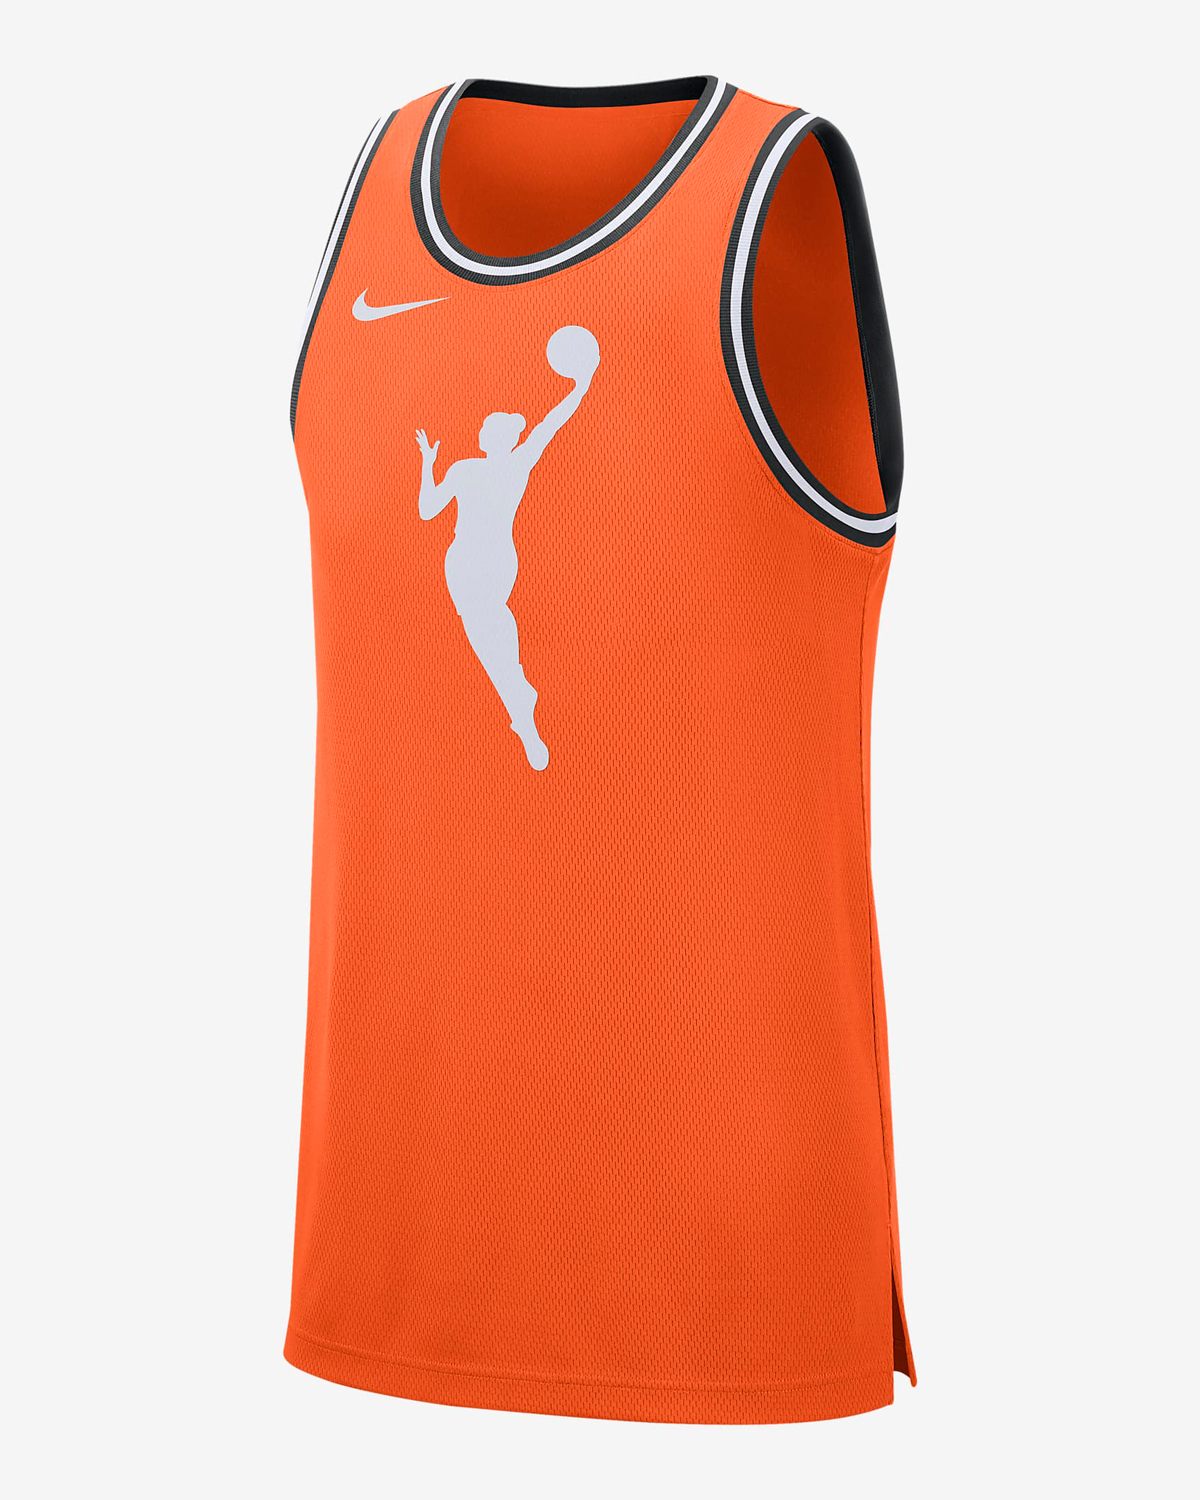 WNBA-Nike-Tank-Top-Brilliant-Orange